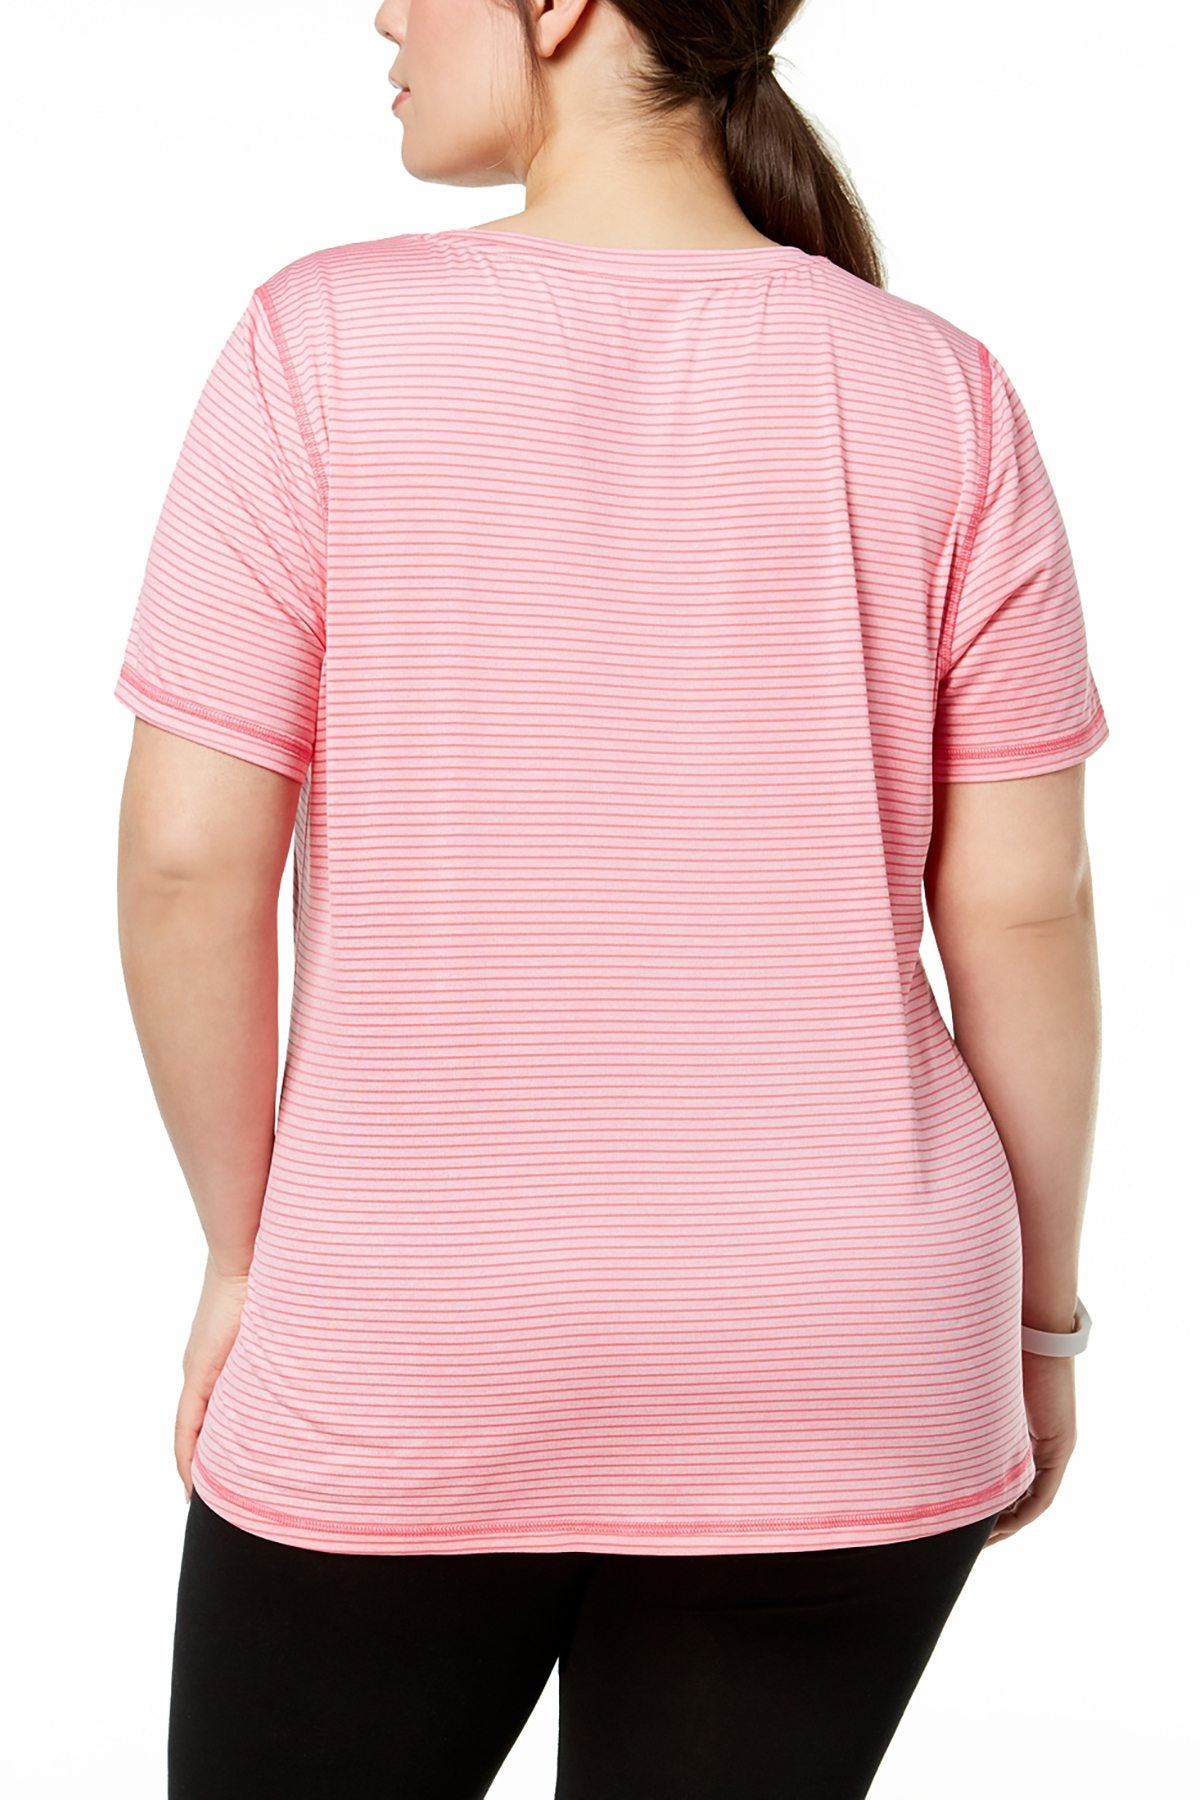 Ideology PLUS Camellia-Rose Striped Performance T-Shirt